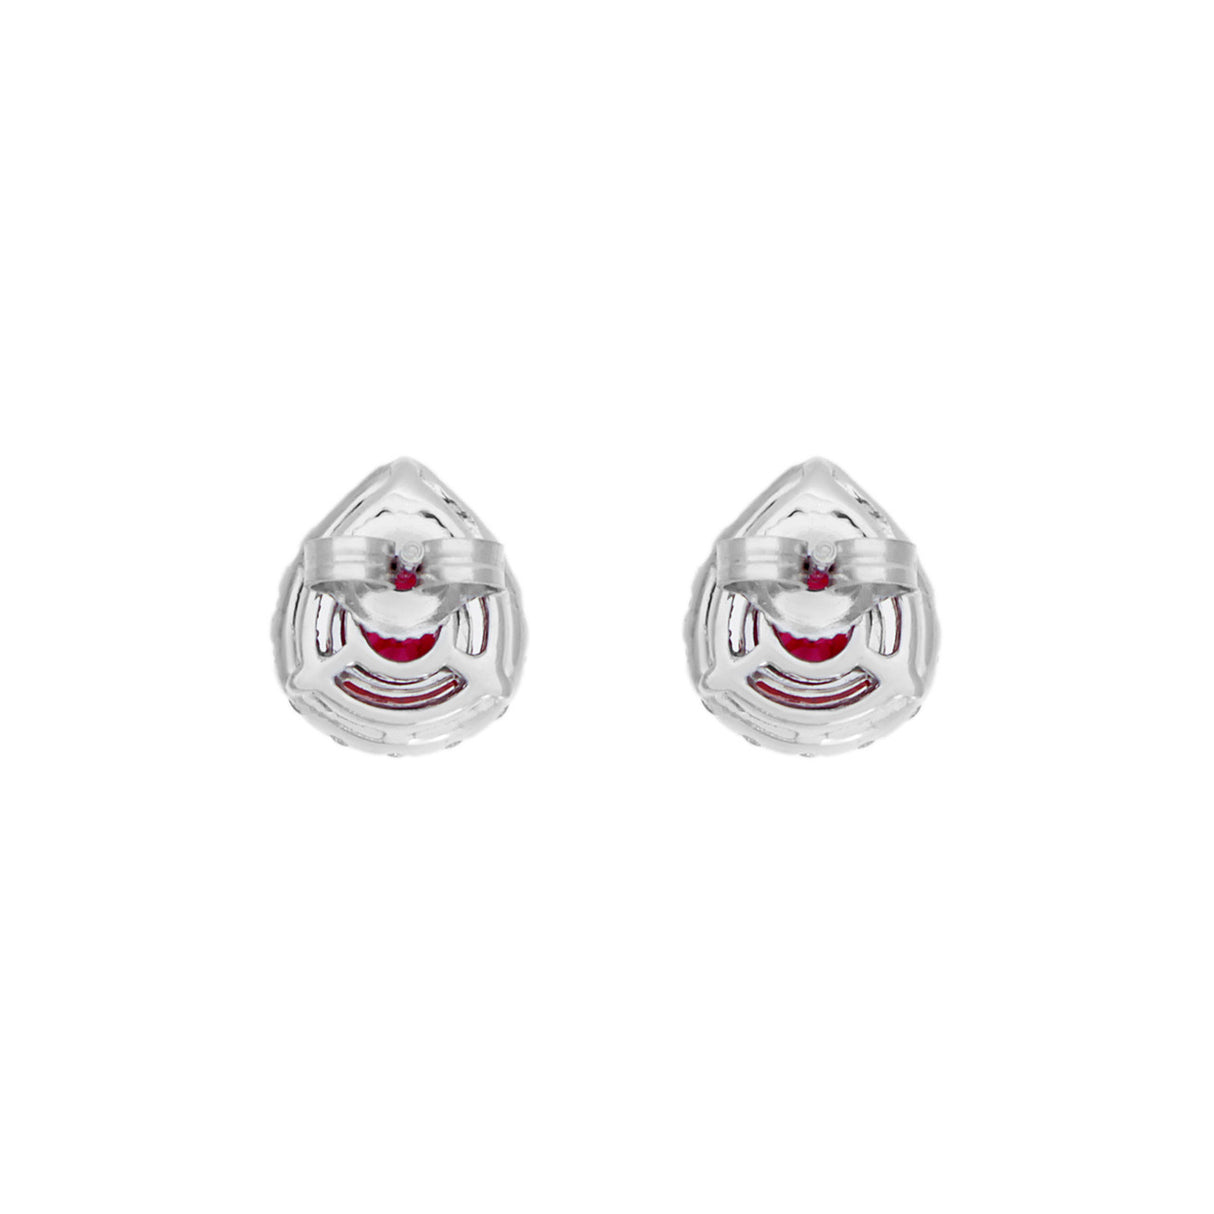 18K White Gold 1.58 Carat Ruby Diamond Earrings